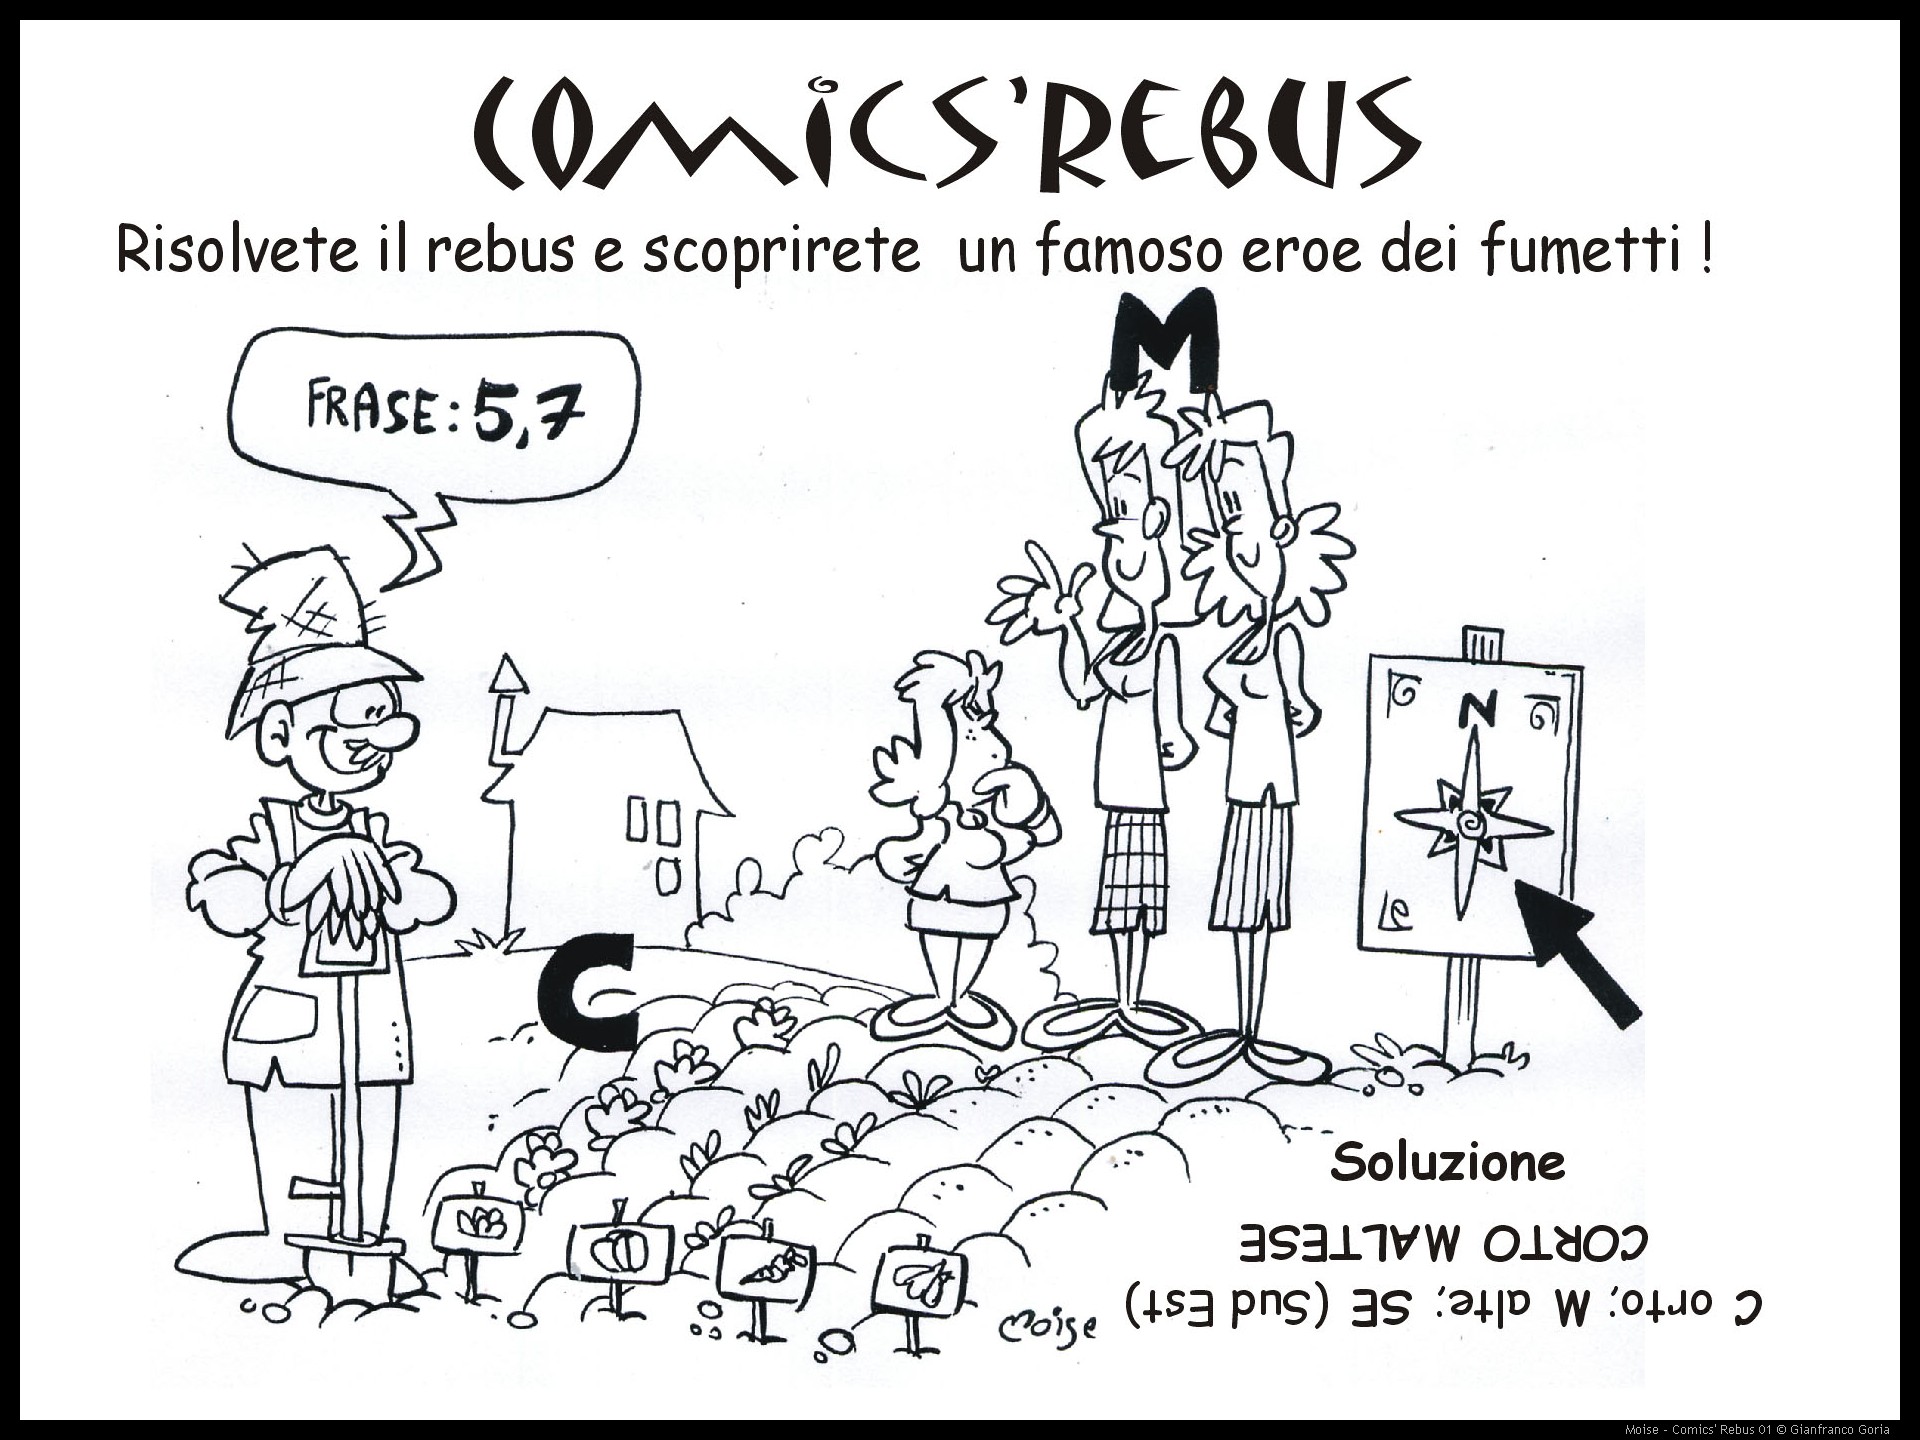 Moise - Comics' Rebus 01.jpg